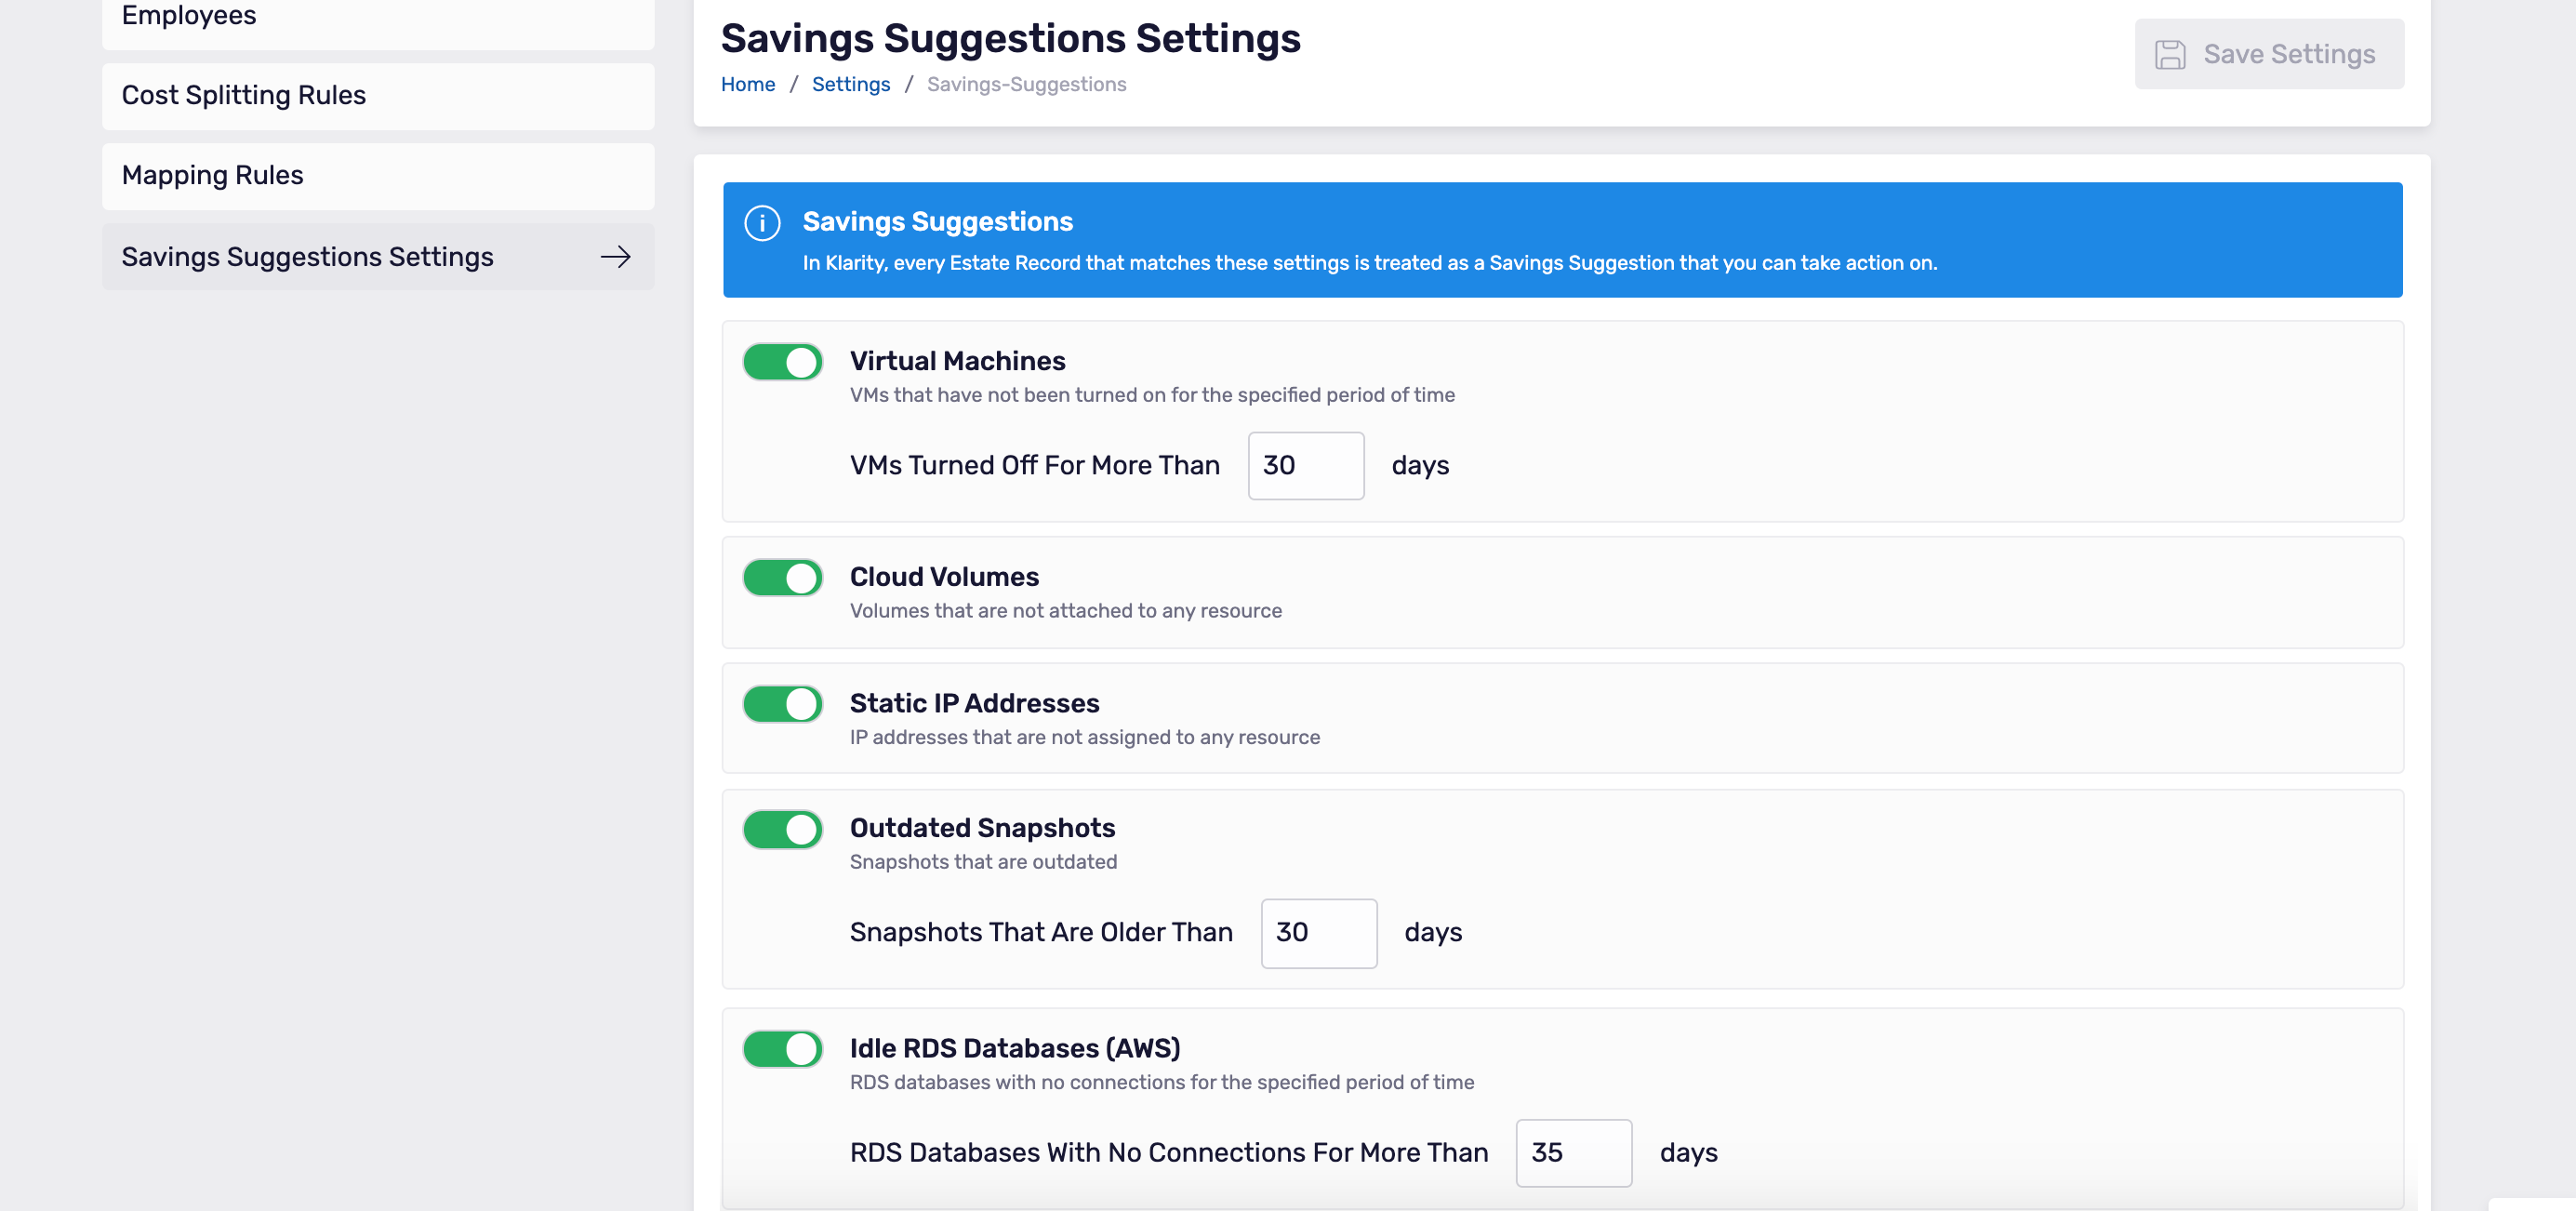 Savings suggestions settings